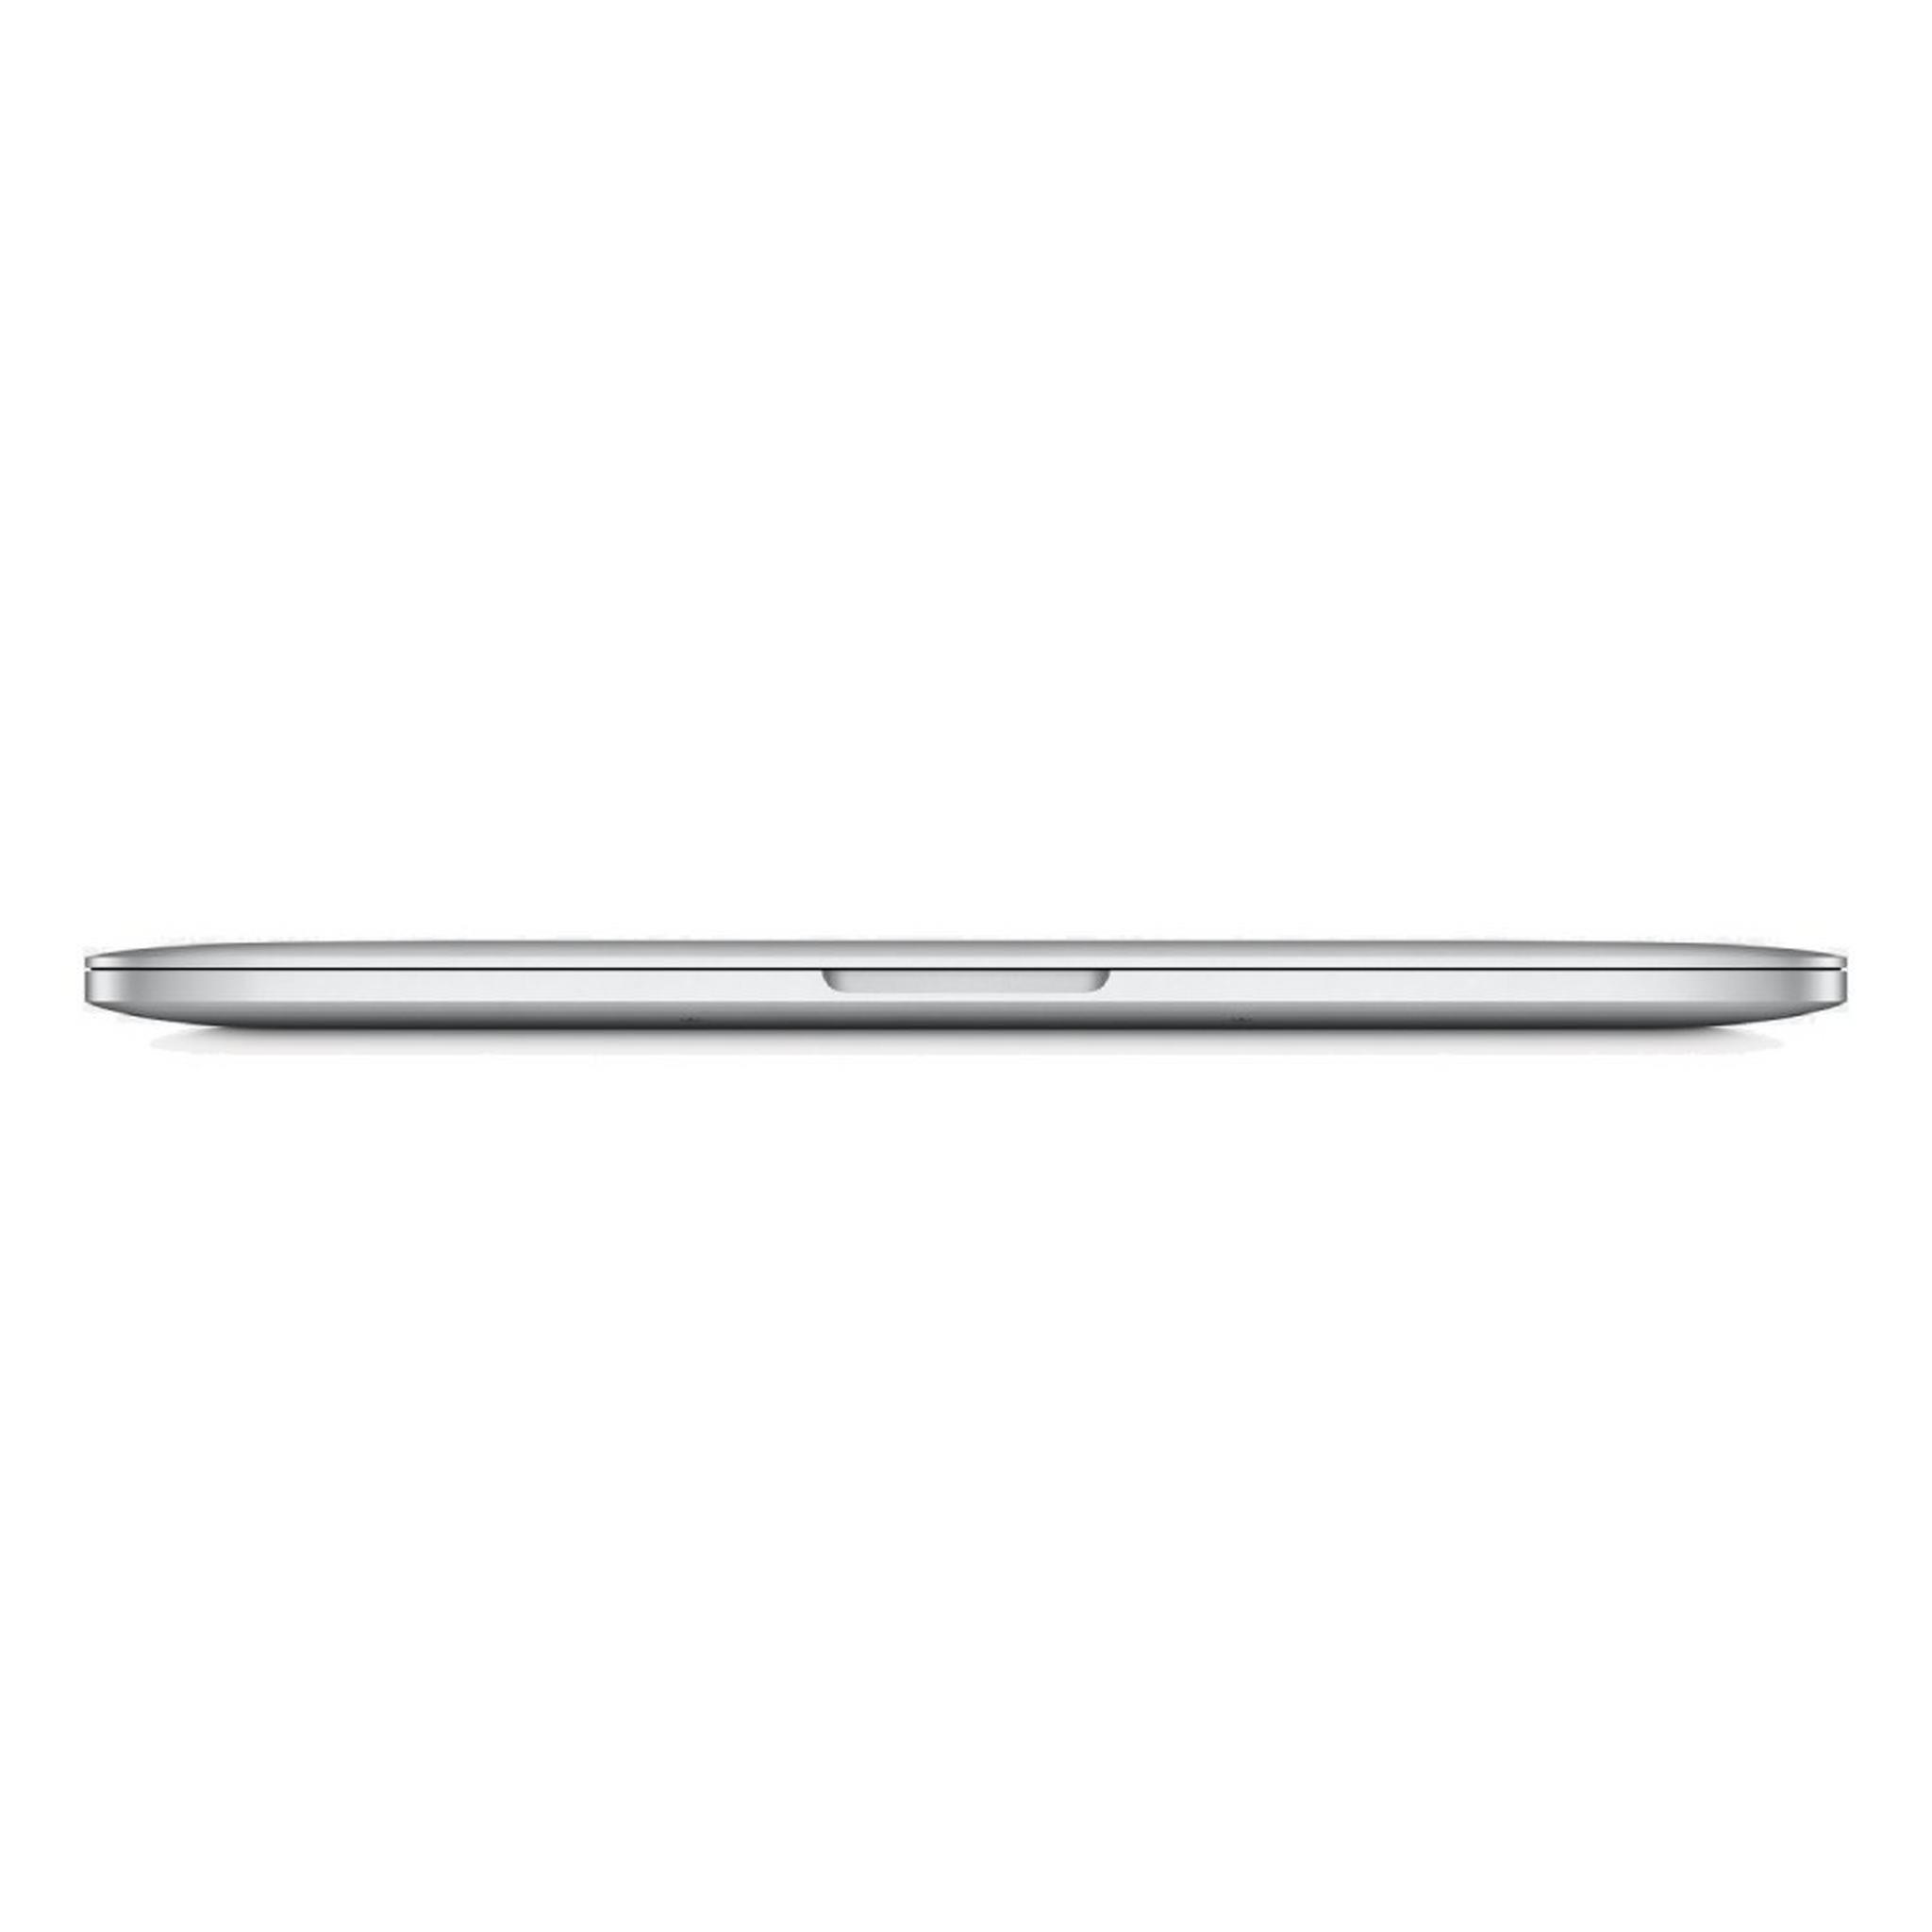 Apple MacBook Pro M2, 8GB RAM, 256GB SSD, 13-inch, 2022, MNEP3AB/A - Silver